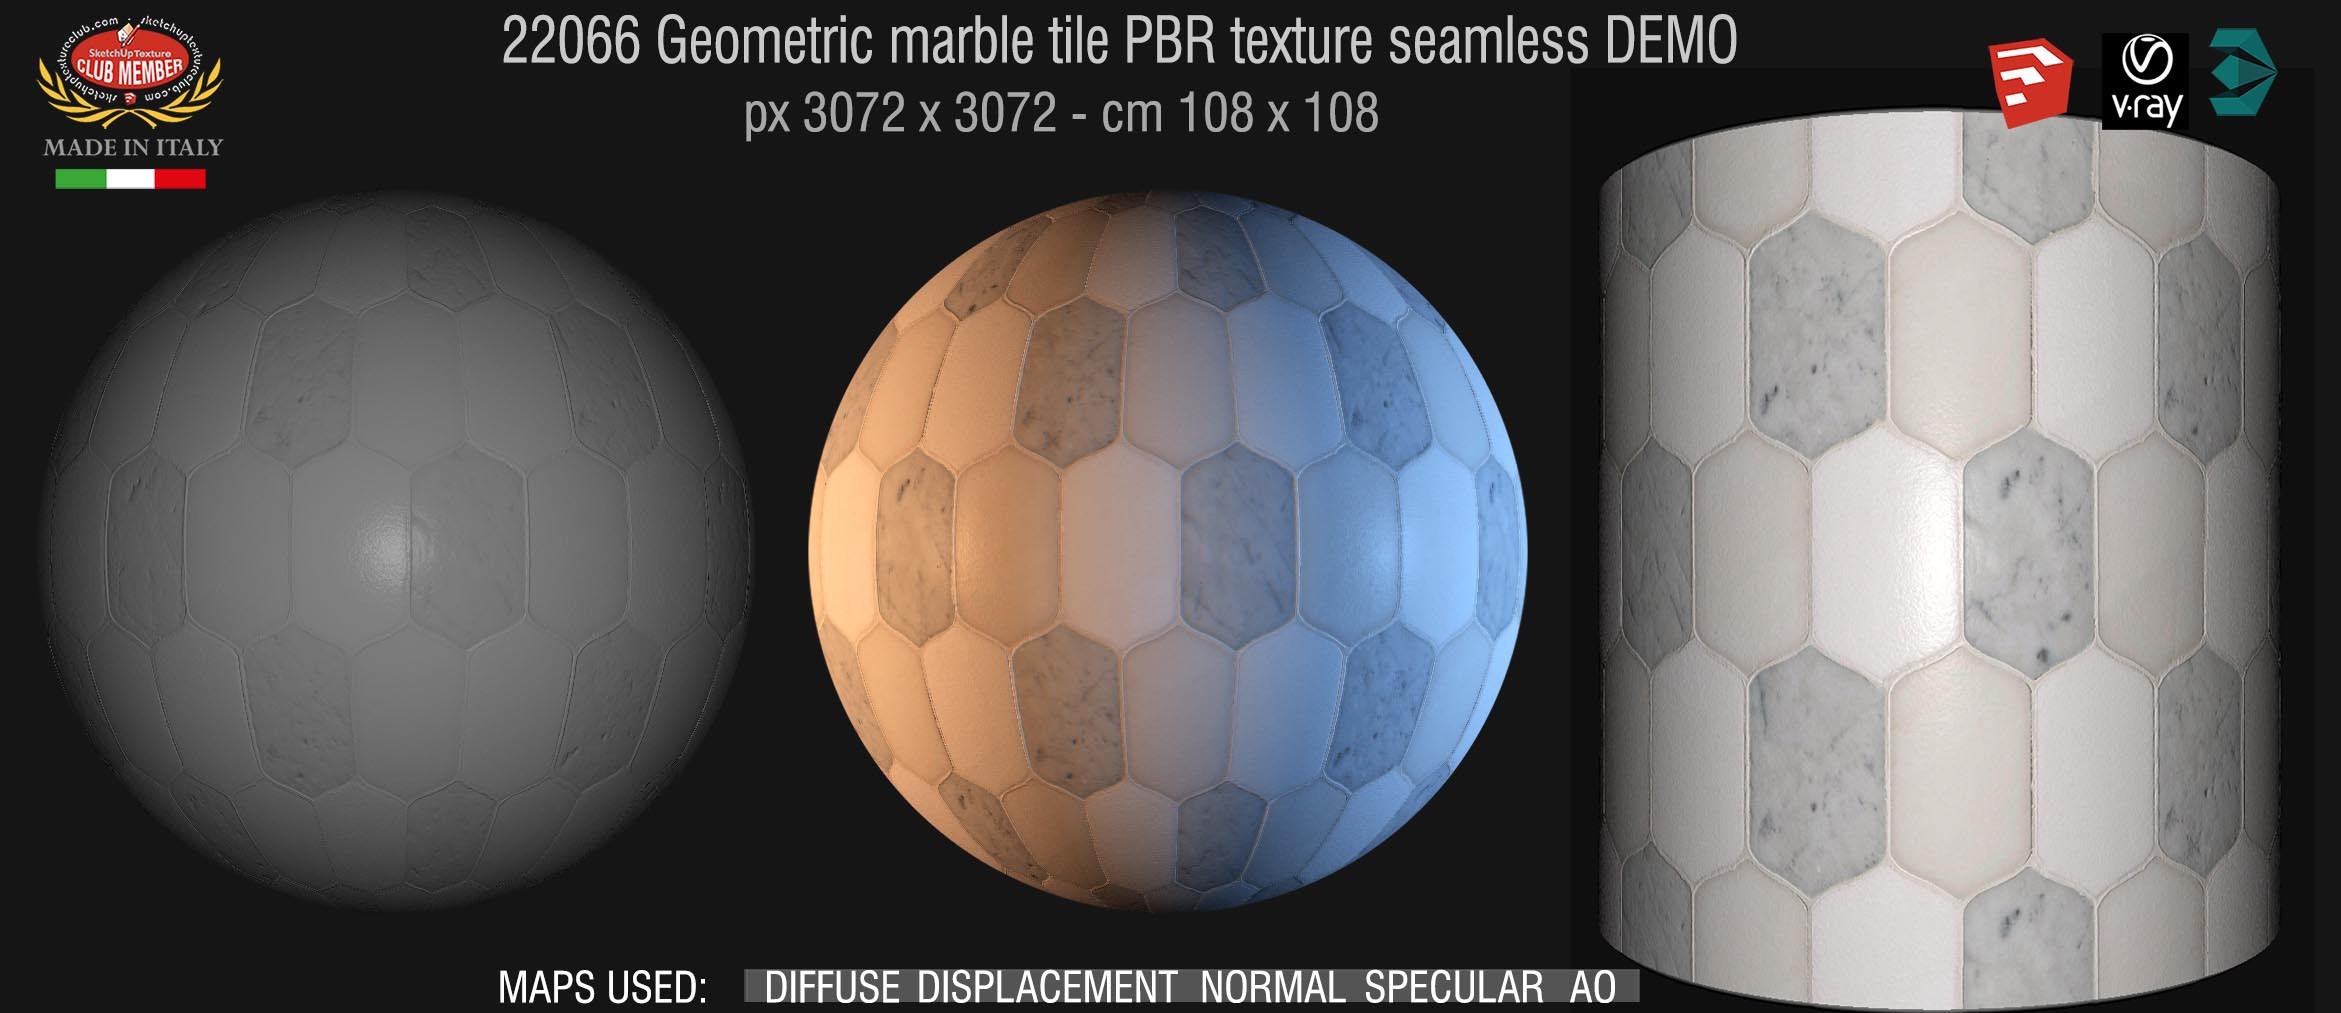 22066 Geometric marble tile PBR texture seamless DEMO